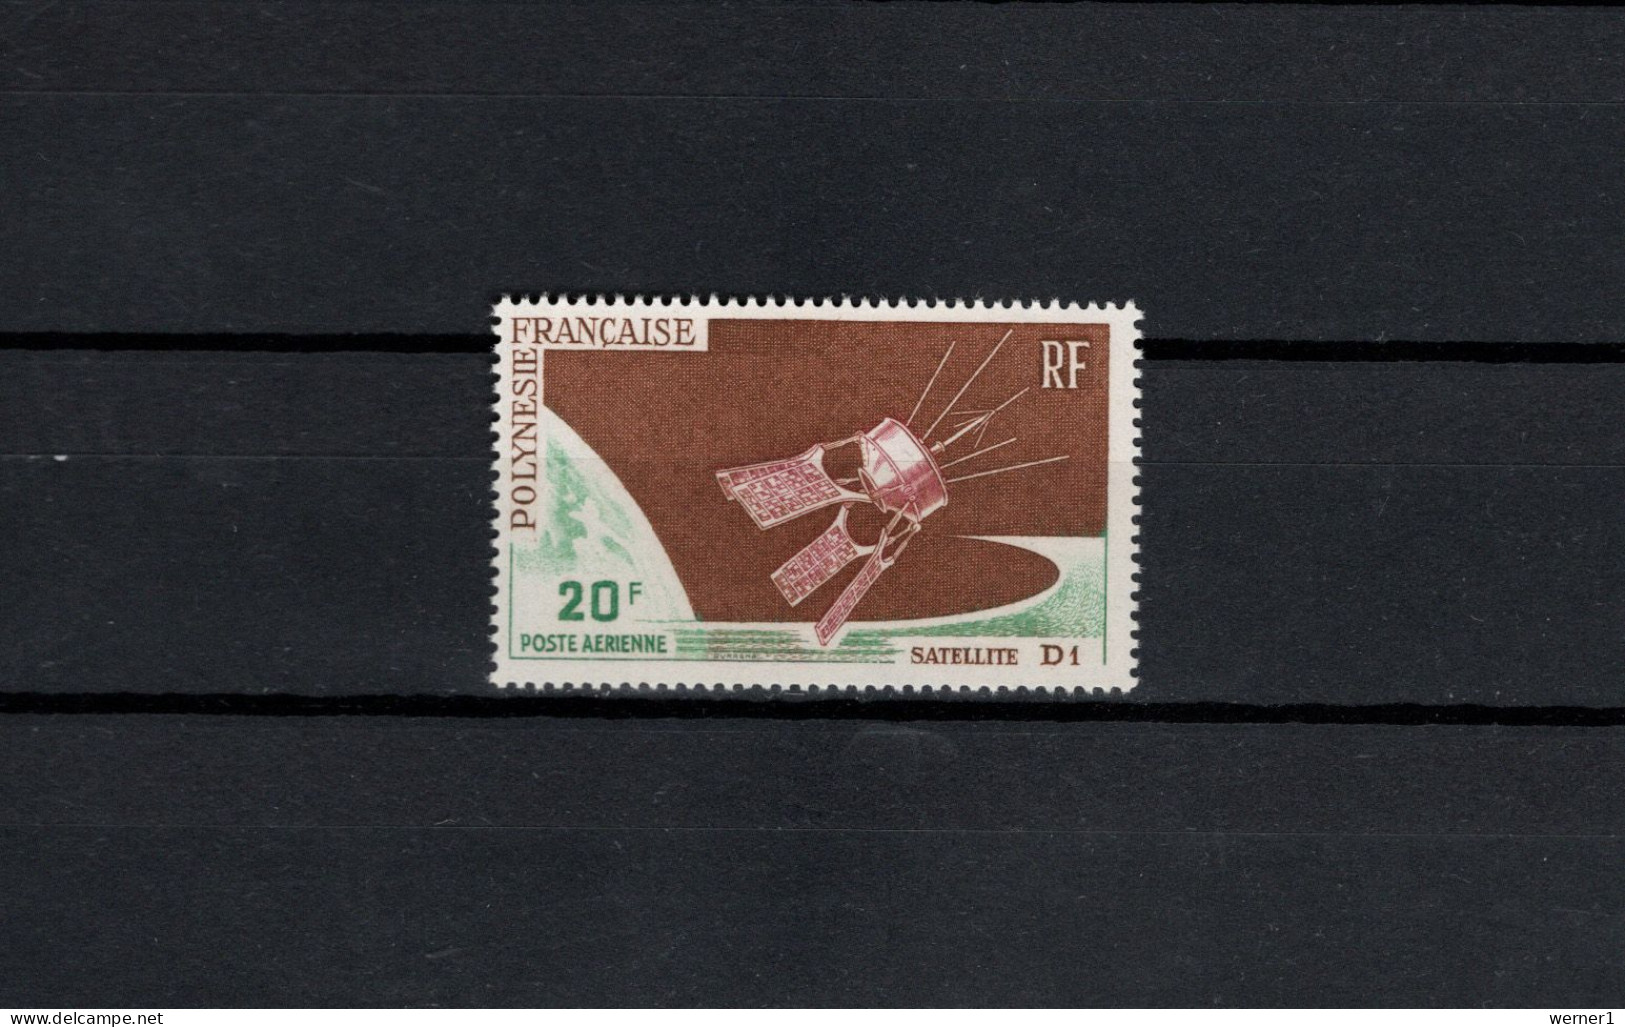 French Polynesia 1966 Space, D1 Satellite Stamp MNH - Oceanië